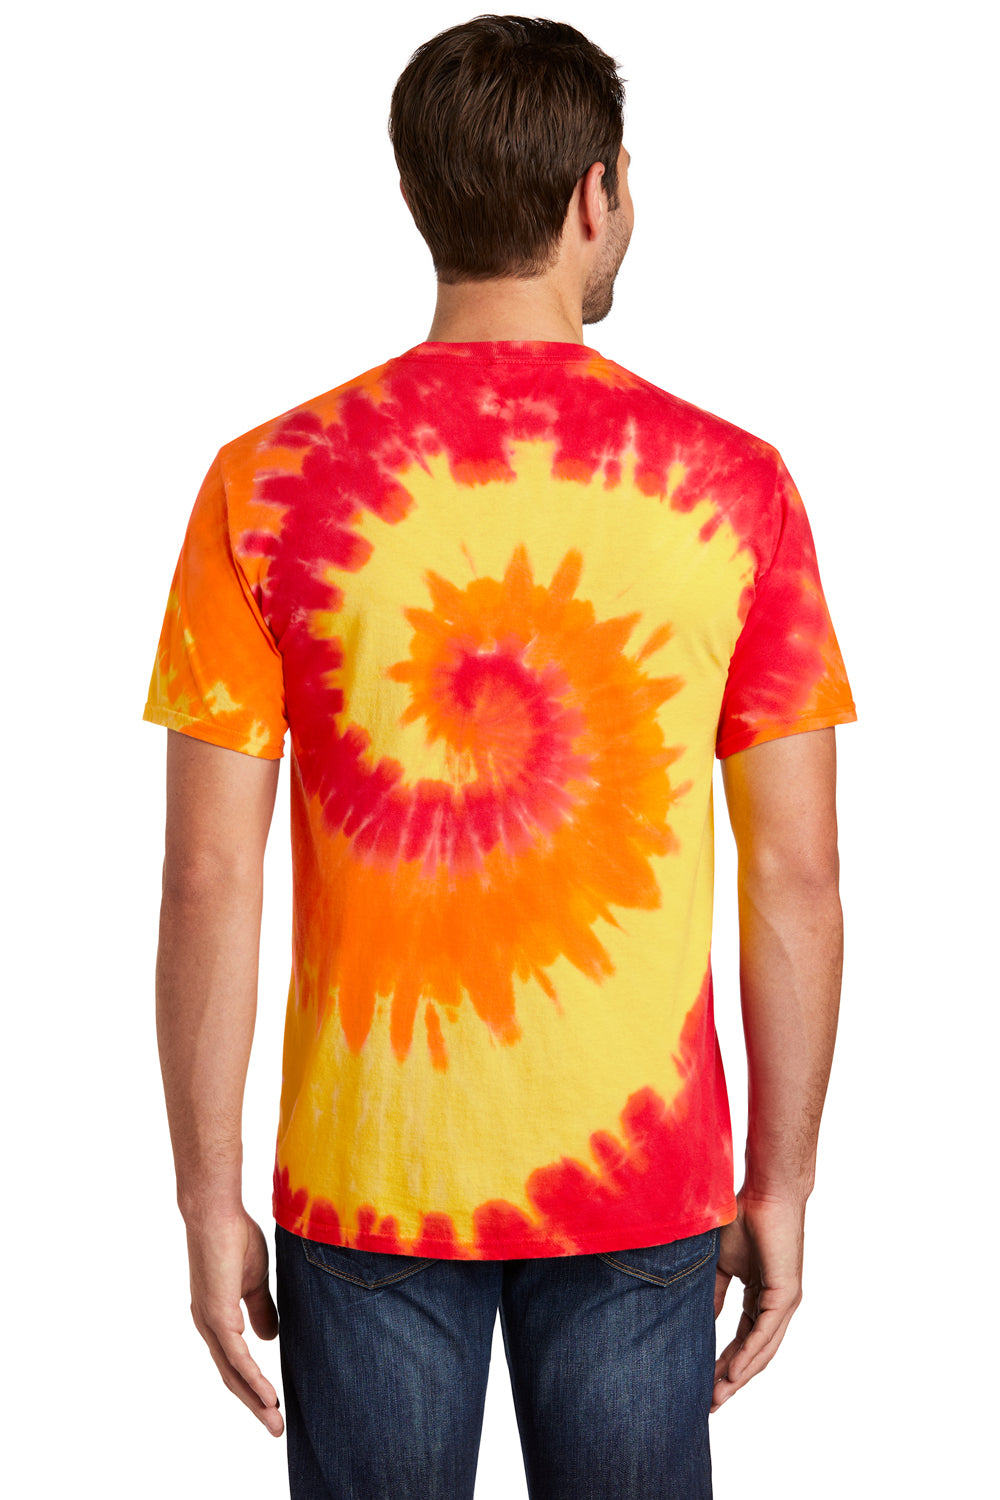 Port & Company PC147 Mens Tie-Dye Short Sleeve Crewneck T-Shirt Blaze Rainbow Back